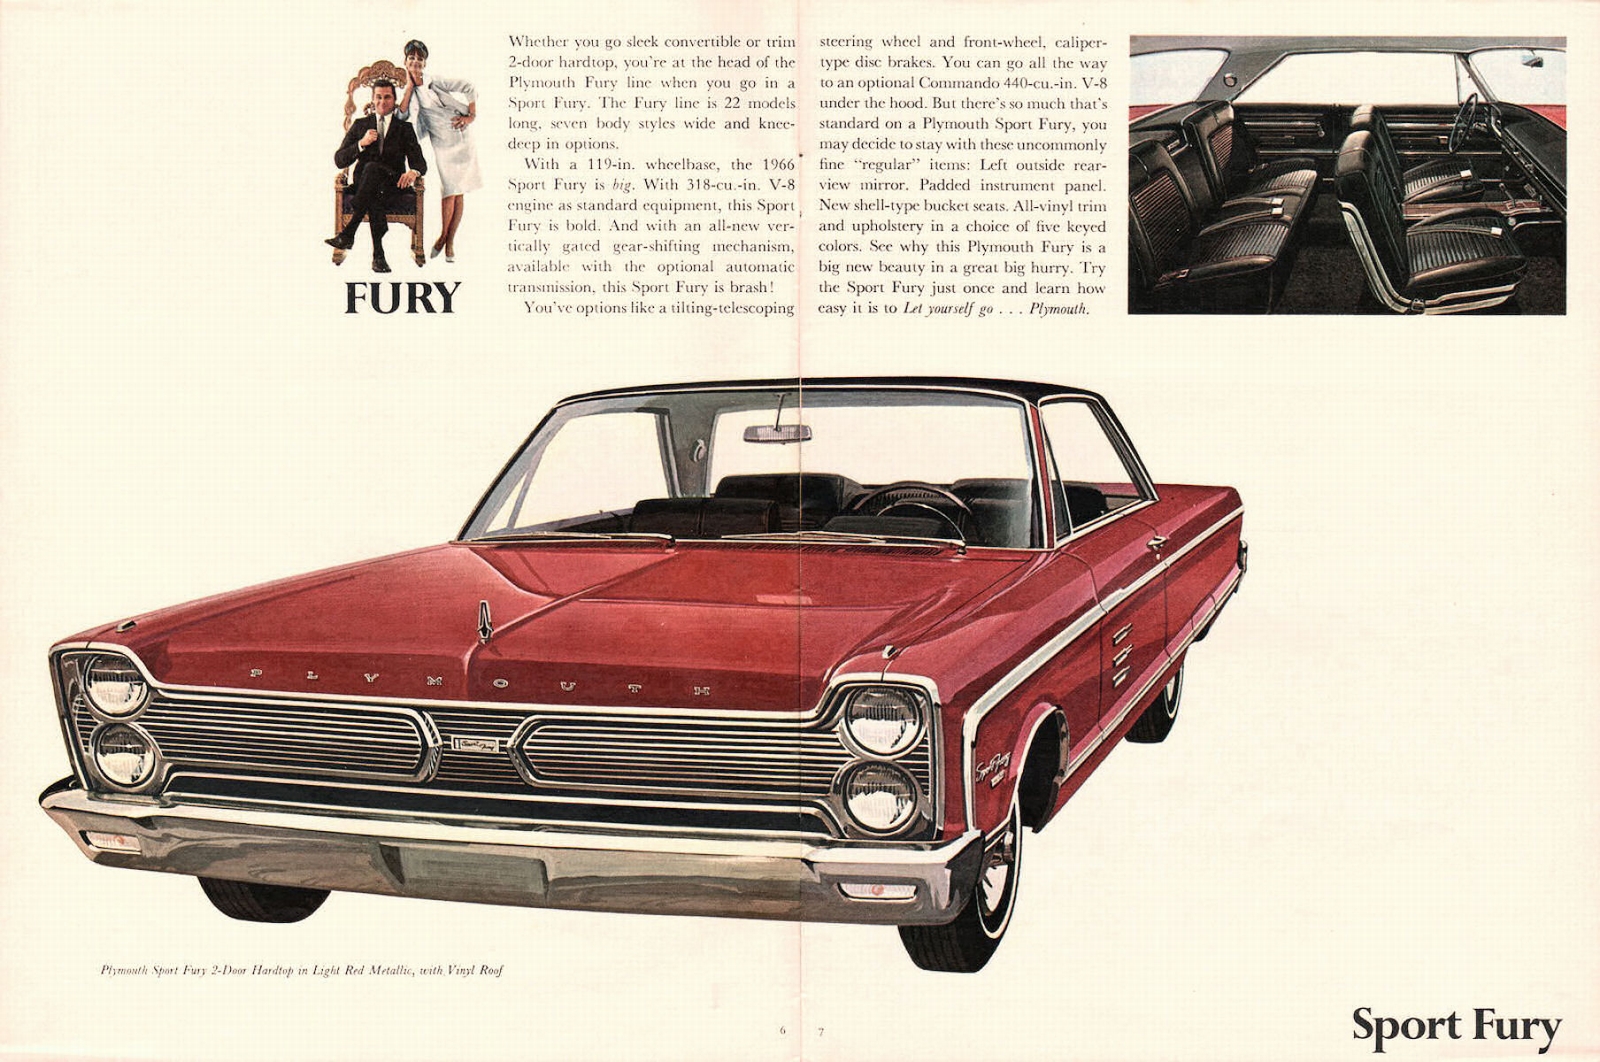 1966 Plymouth Full Line Brochure